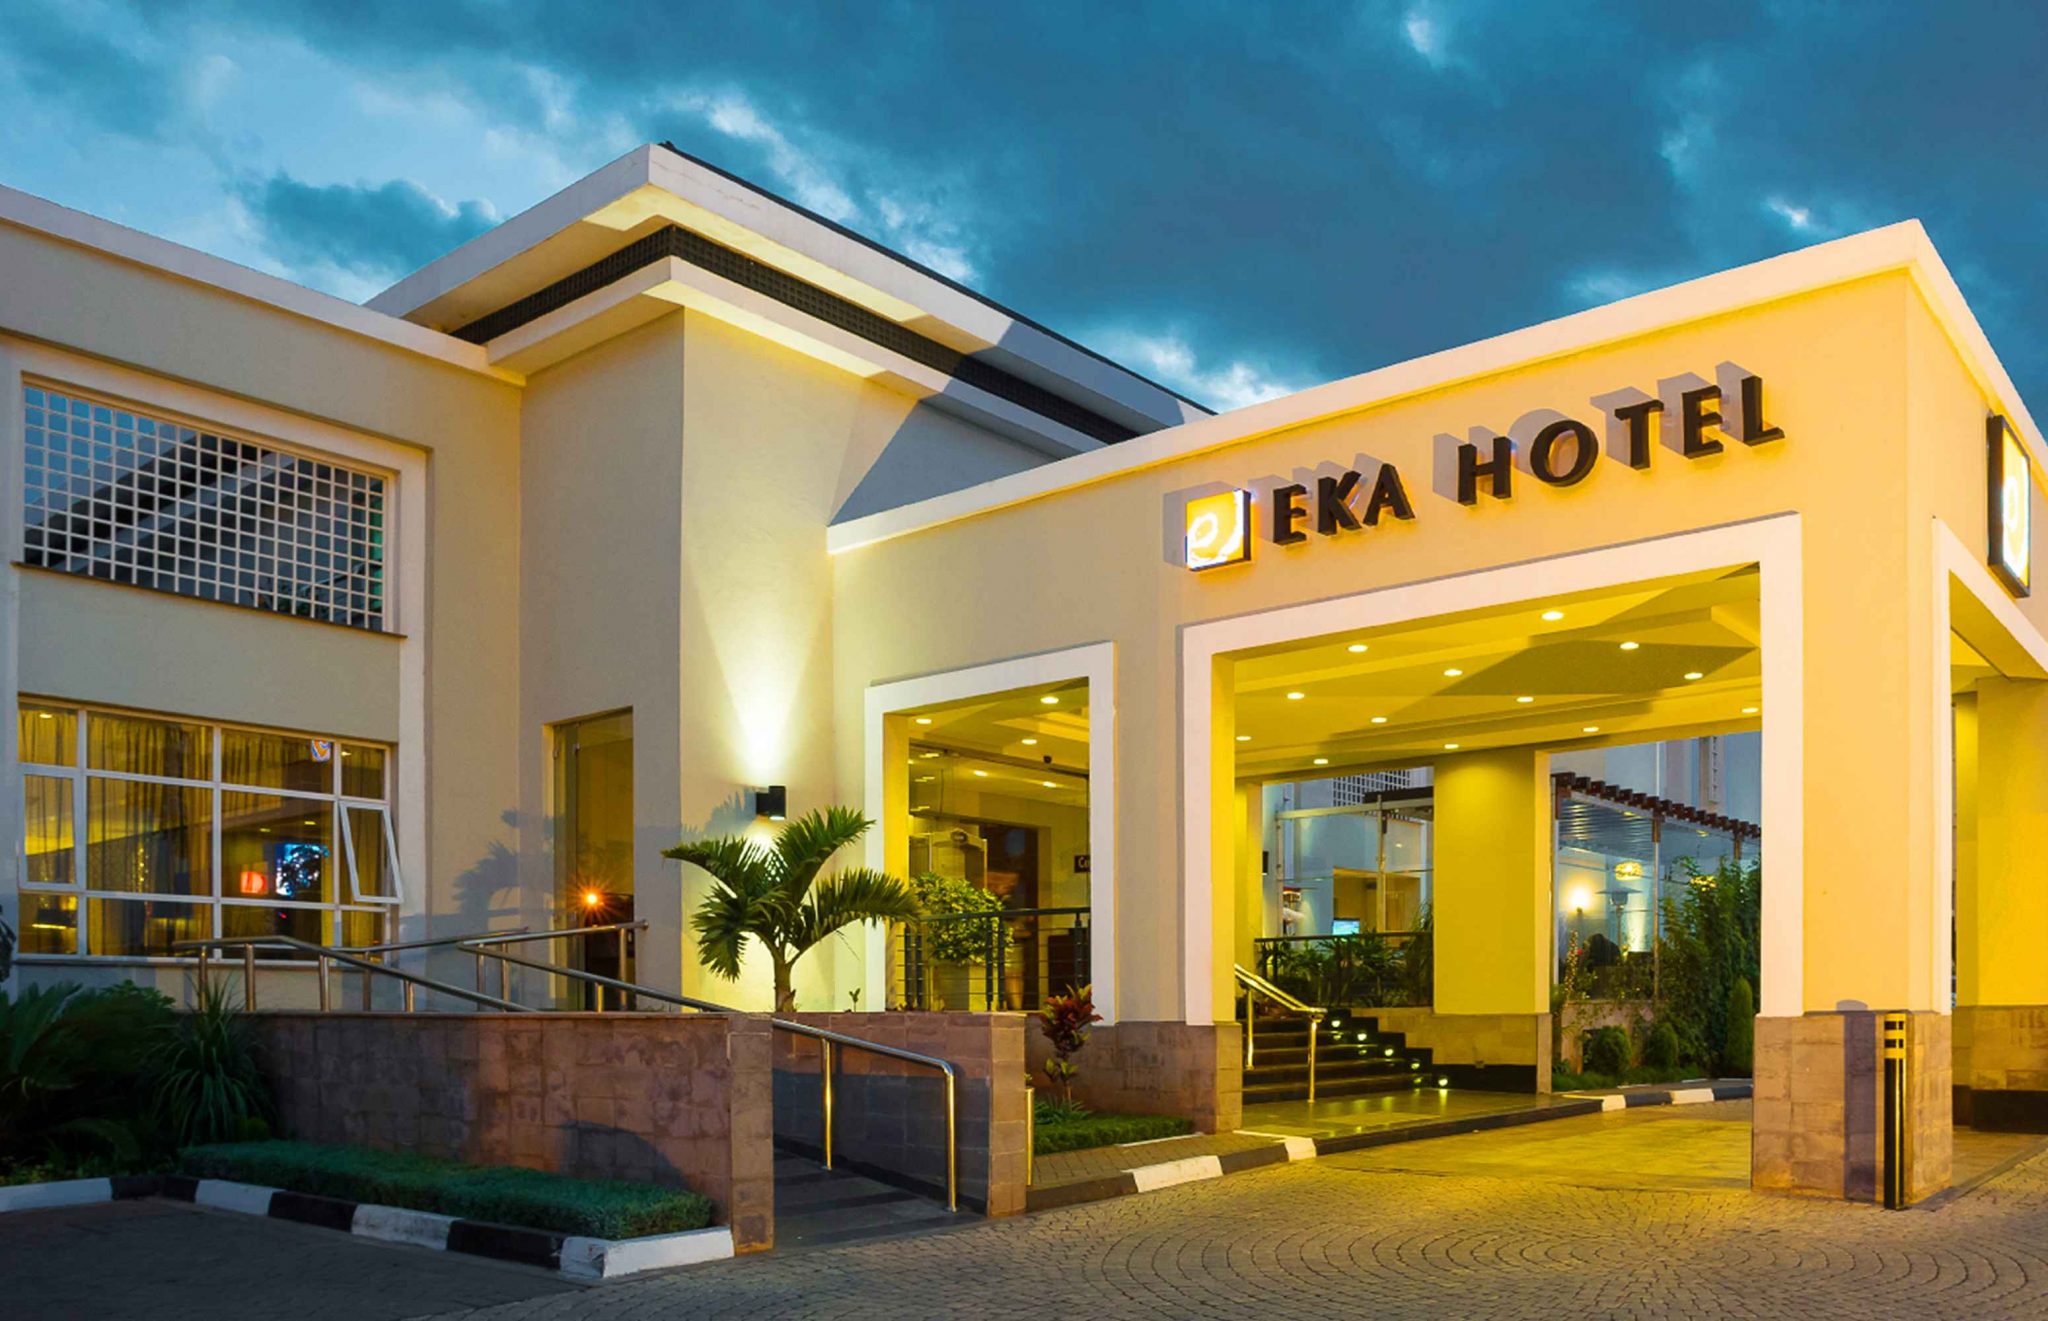 Eka Hotel - 2023 Kenya Safari - photography workshops & luxury tours for travellers